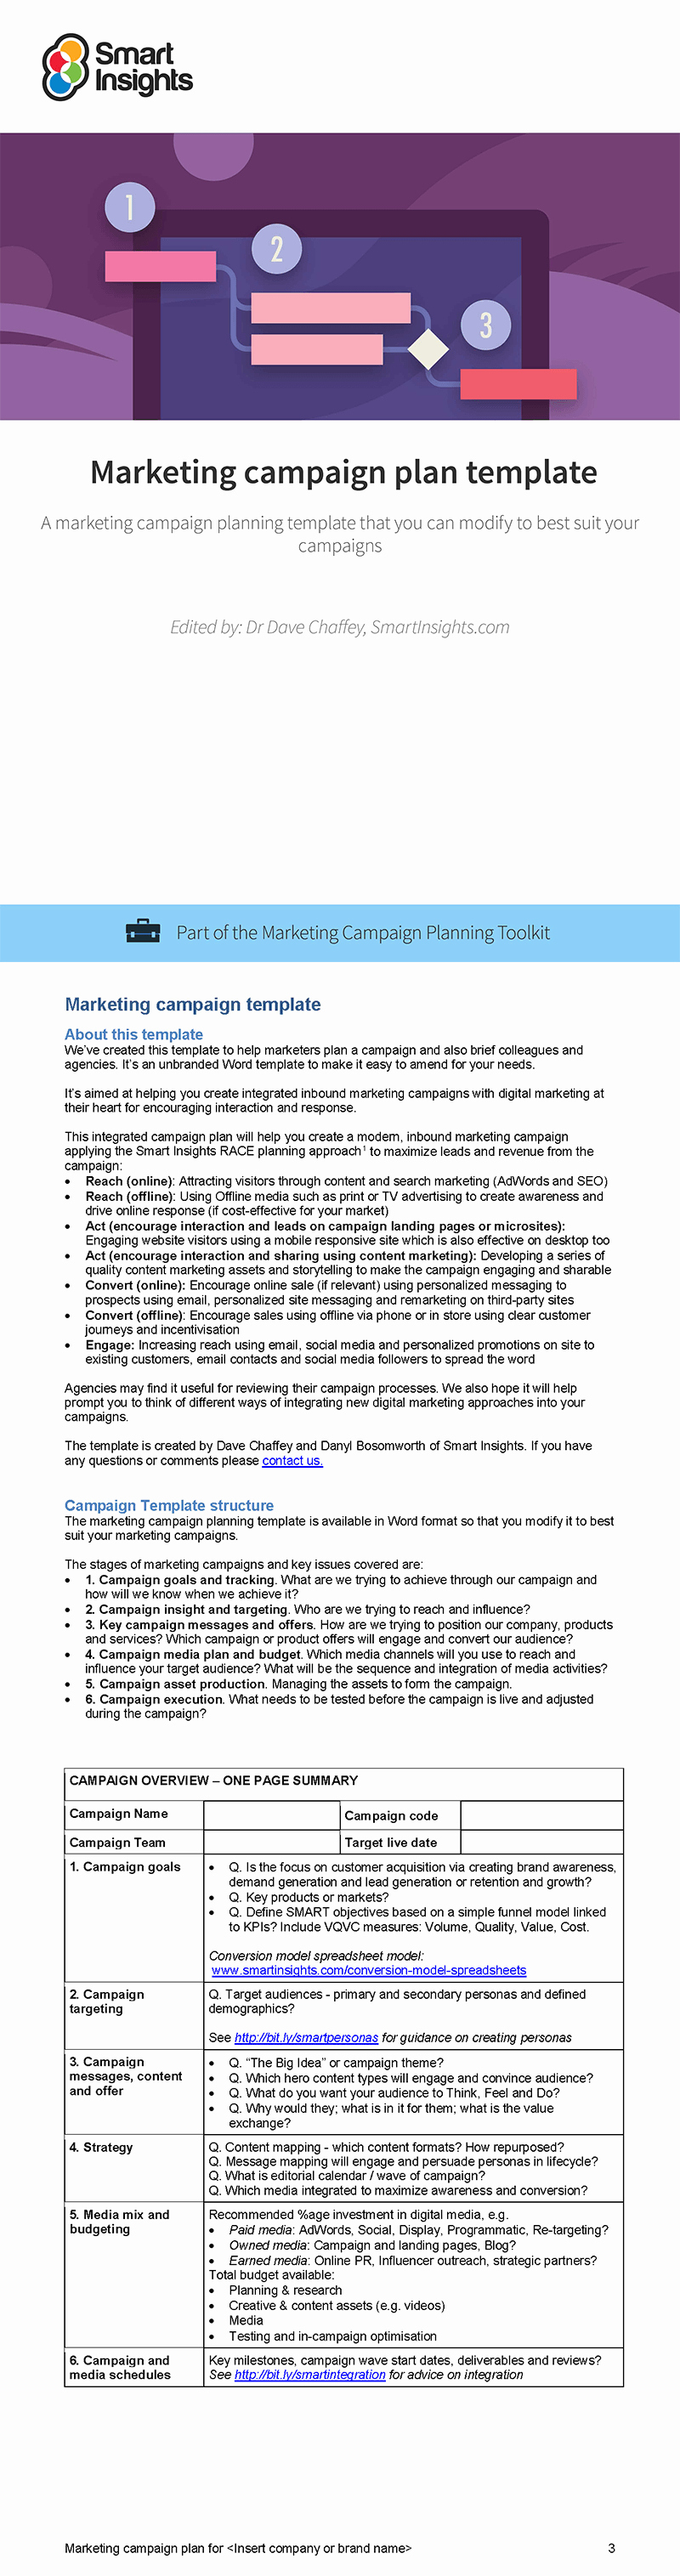 Digital Marketing Campaign Template New Marketing Campaign Plan Template Smart Insights Digital